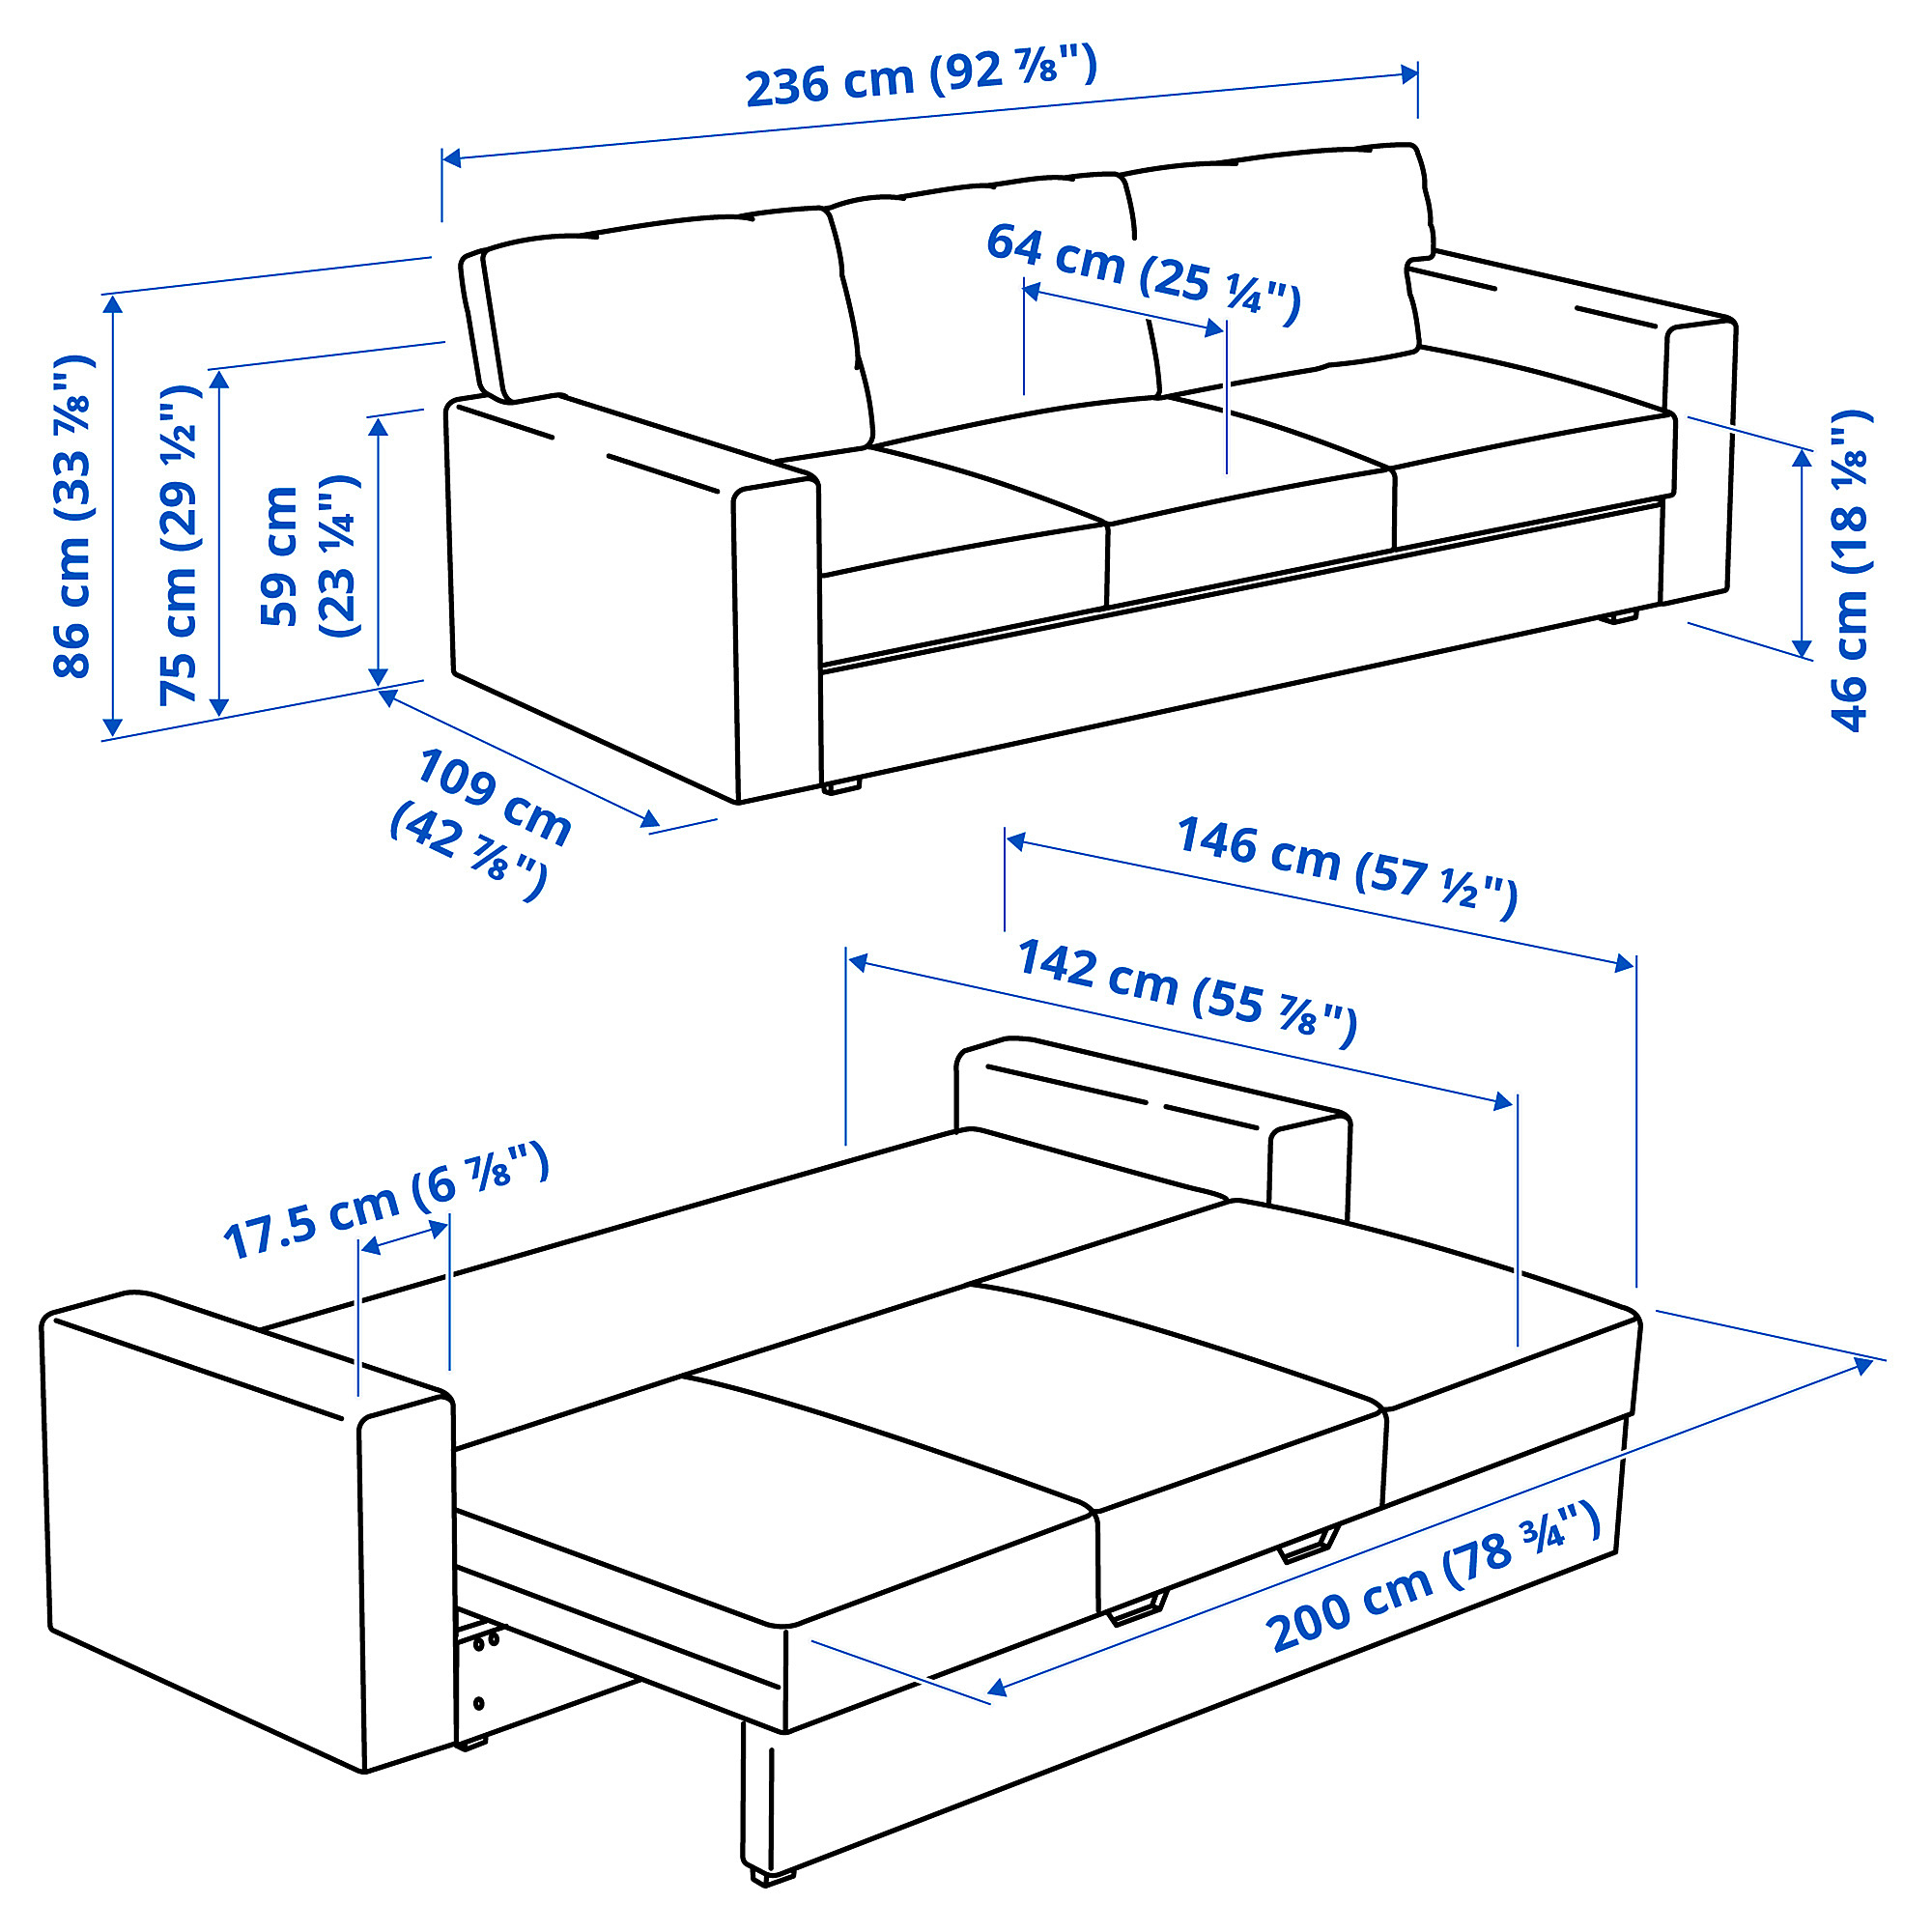 BÅRSLÖV 3-seat sofa-bed